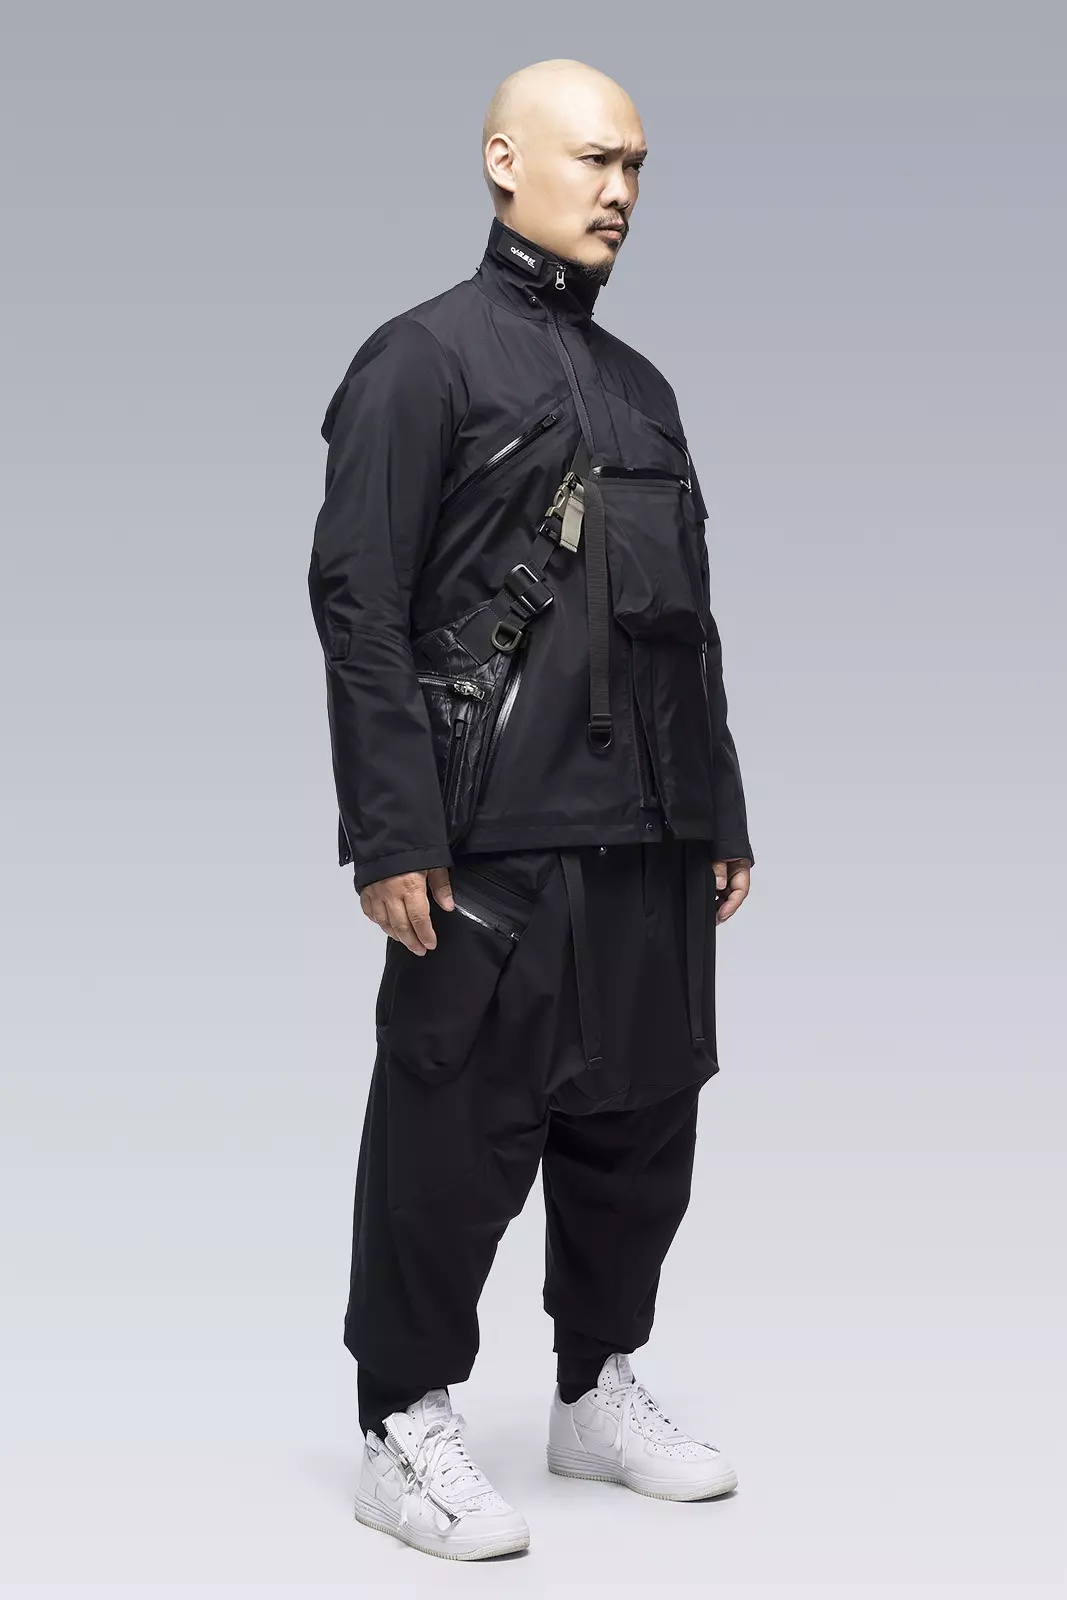 J1A-GTKR-BKS KR EX 3L Gore-Tex® Pro Interops Jacket Black with size 5 WR zippers in gloss black - 37